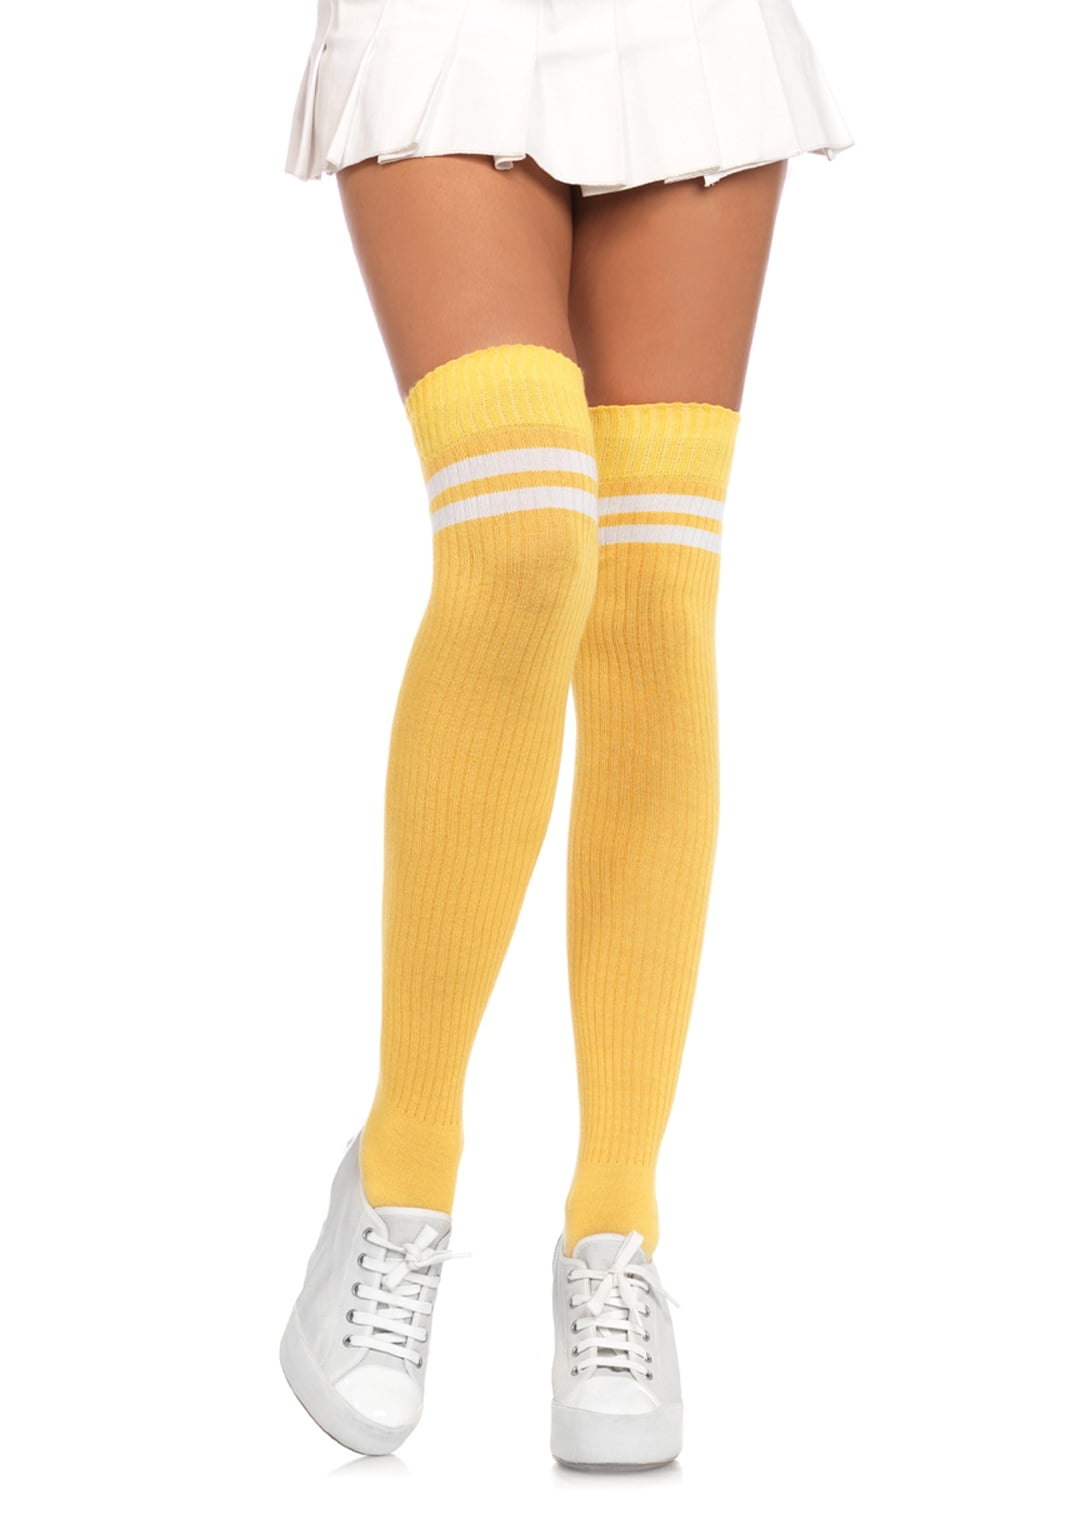 Leg Avenue Women S Athletic Thigh High Socks Yellow